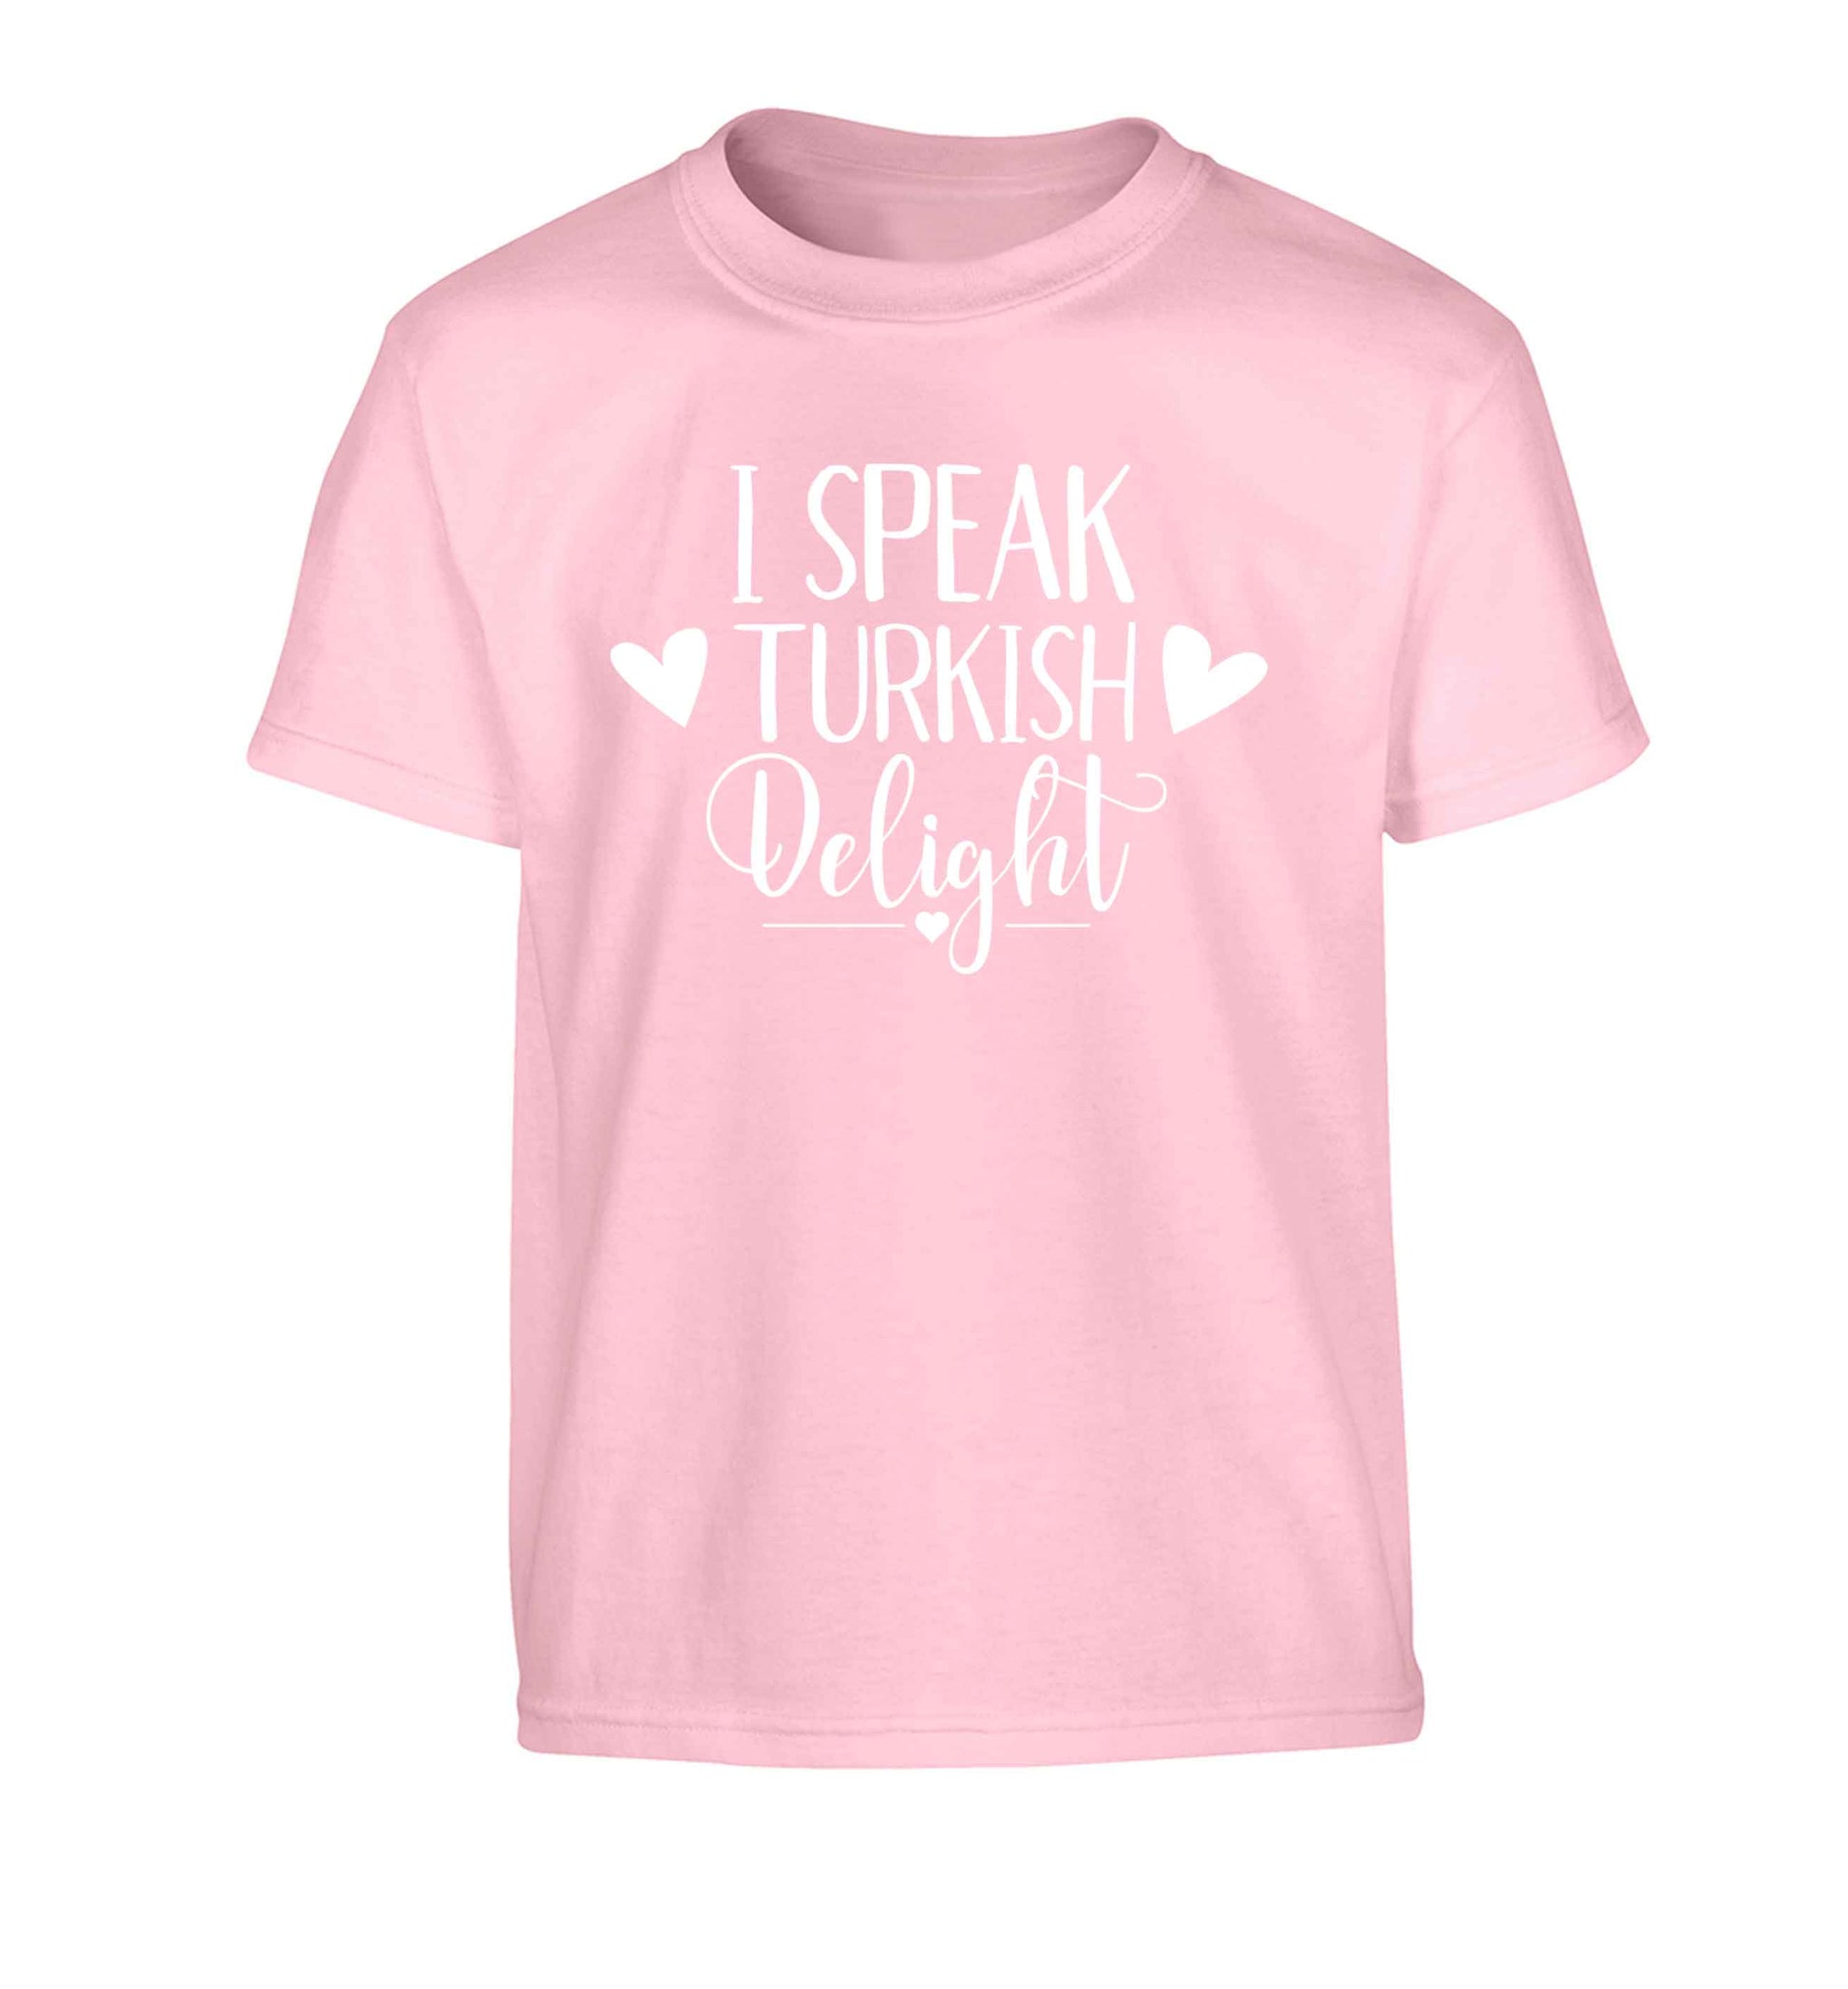 I speak turkish...delight Children's light pink Tshirt 12-13 Years